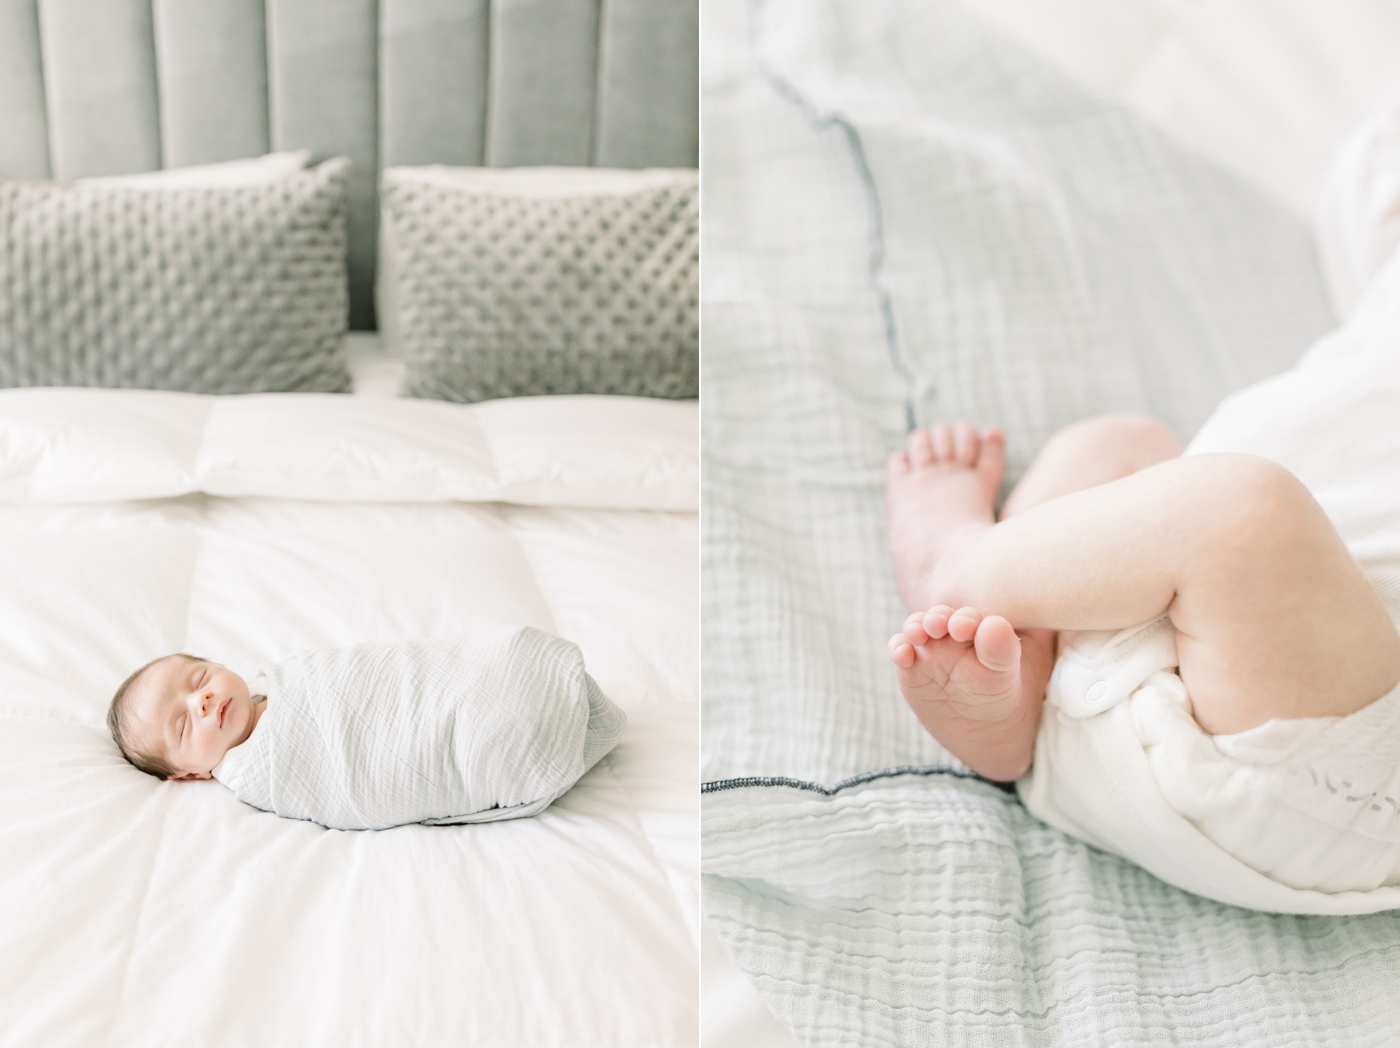 Sleeping newborn baby details | Photo by Caitlyn Motycka Photography.